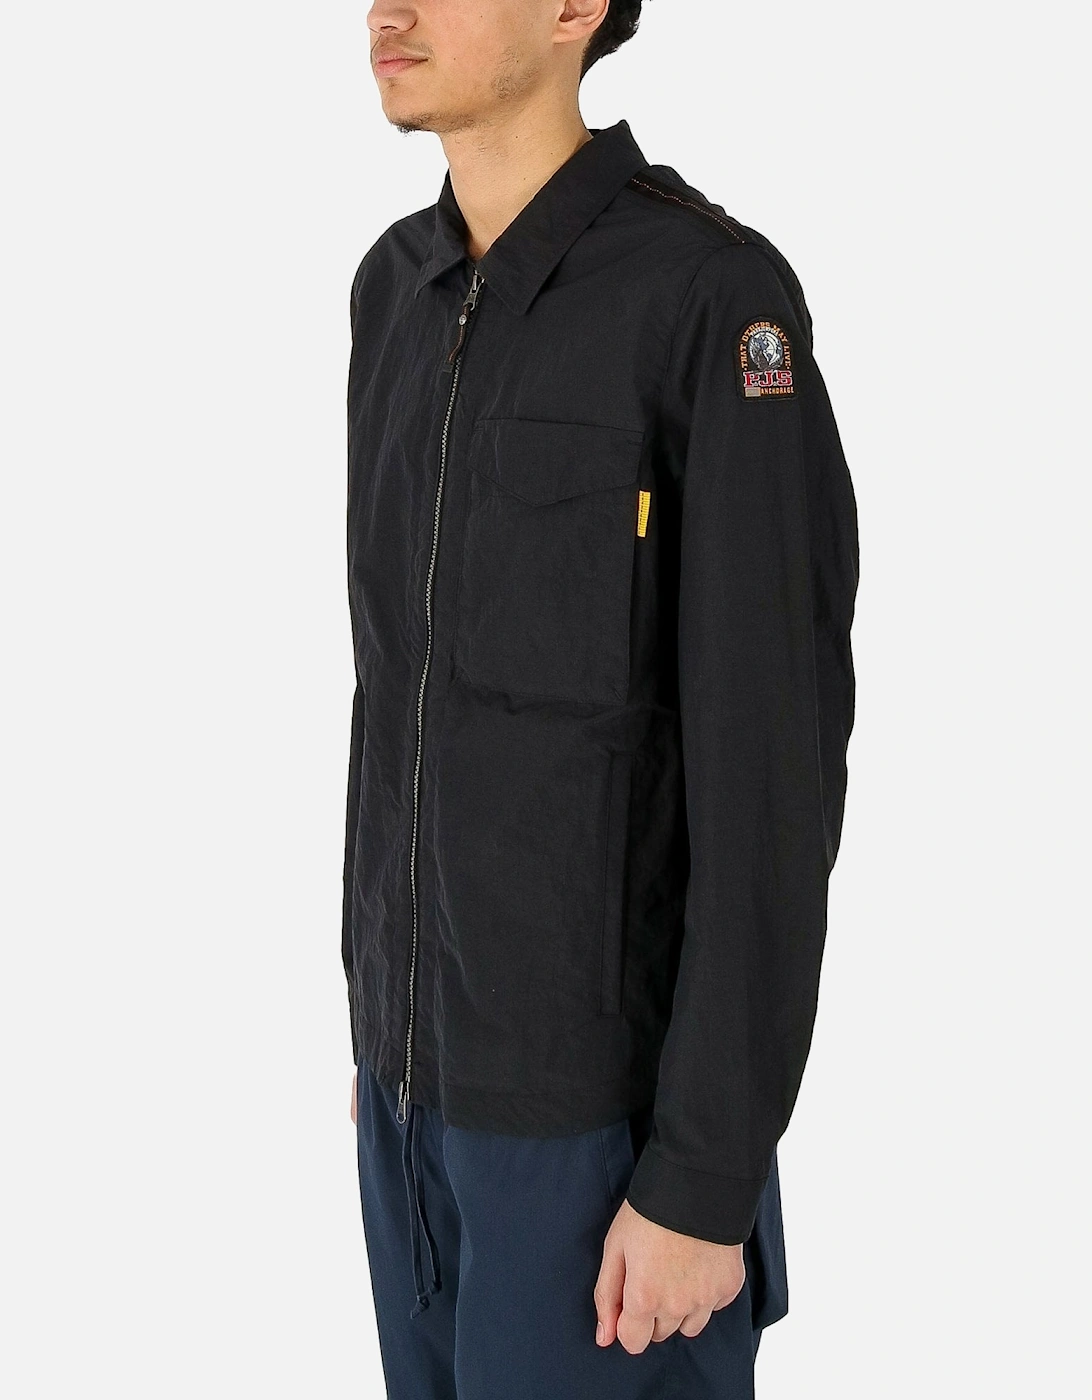 Storma Black Overshirt Jacket